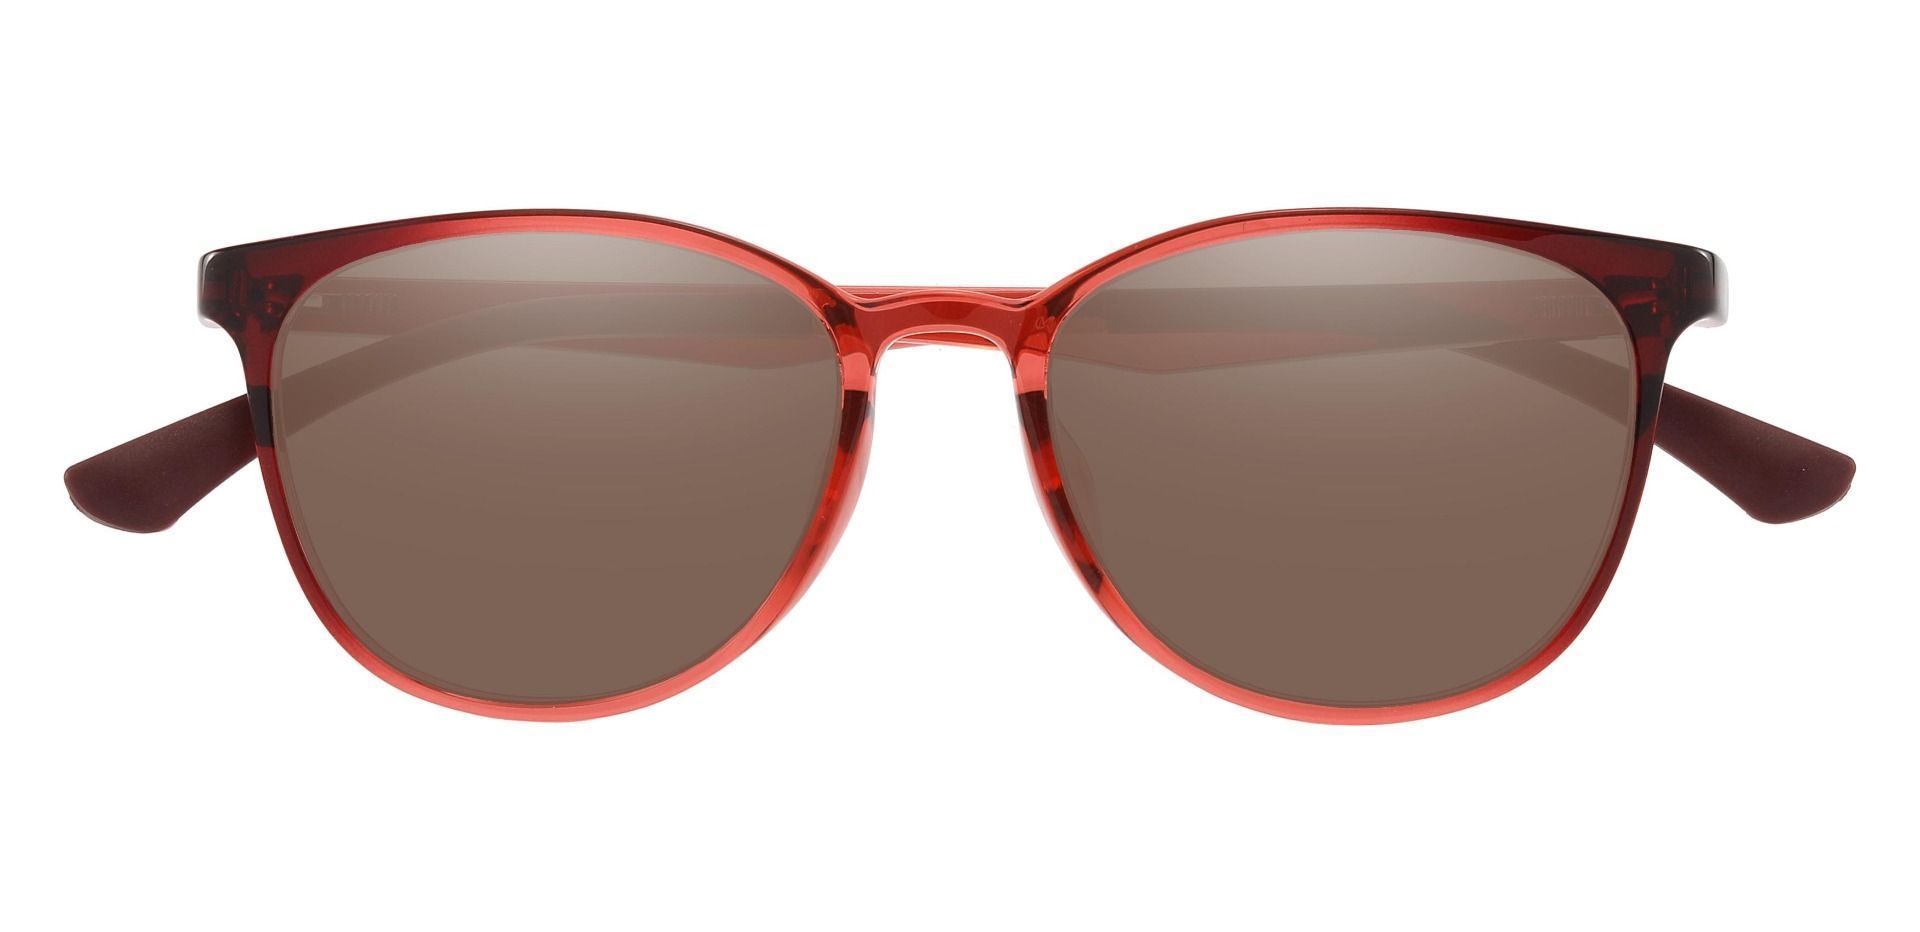 Pembroke Oval Progressive Sunglasses - Pink Frame With Brown Lenses